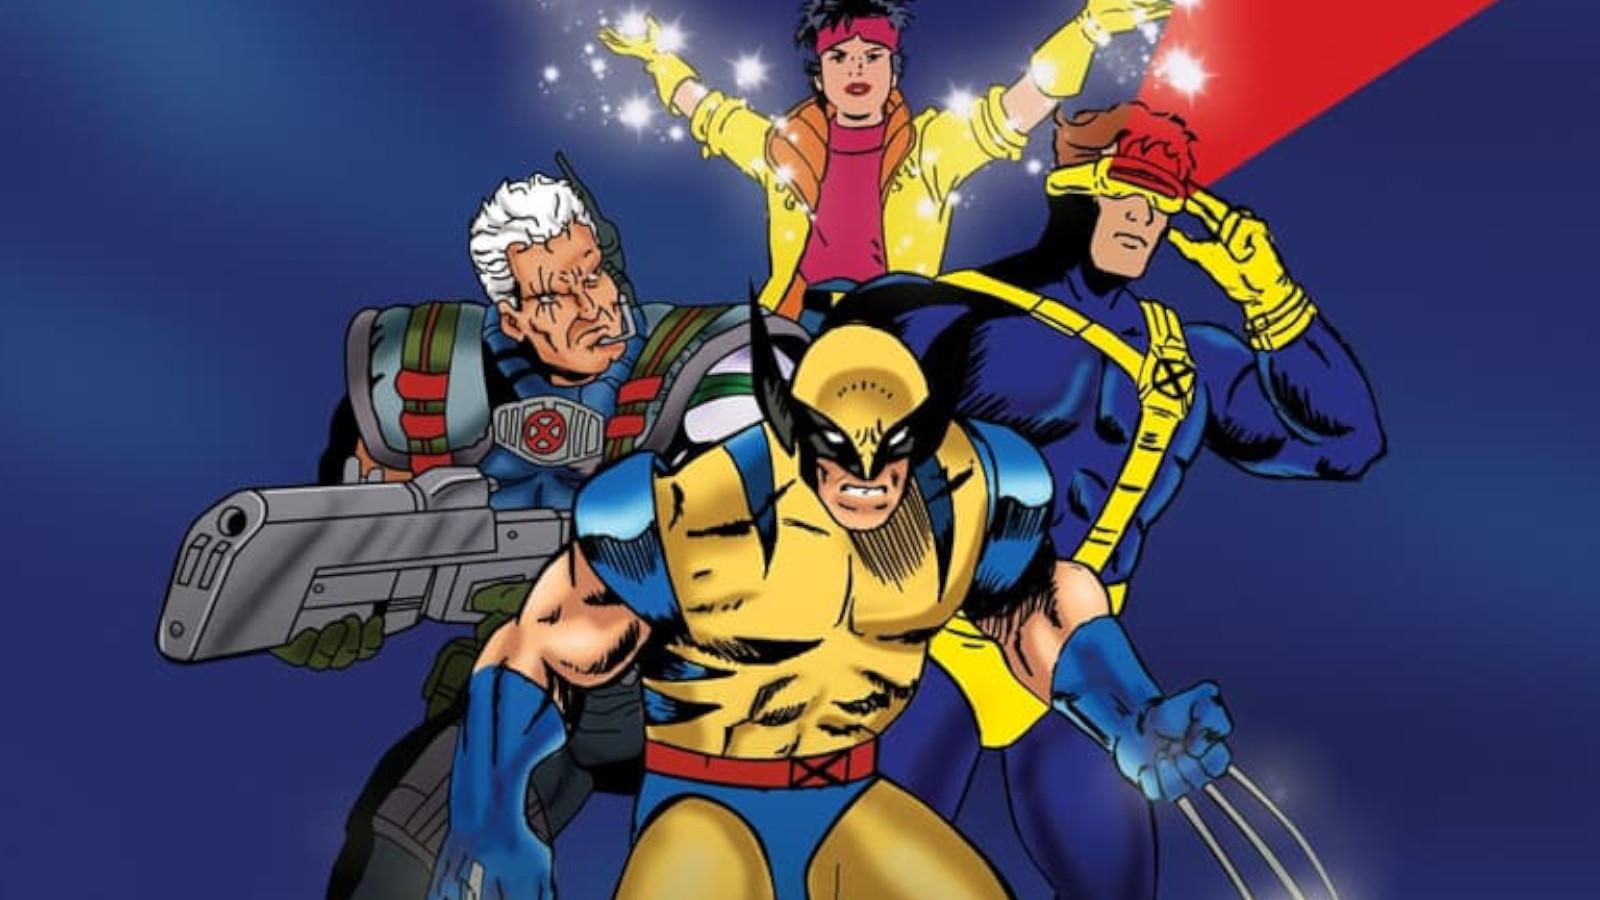 Marvel Legends X-Men '97 Action Figures Wave 2 Unveiled